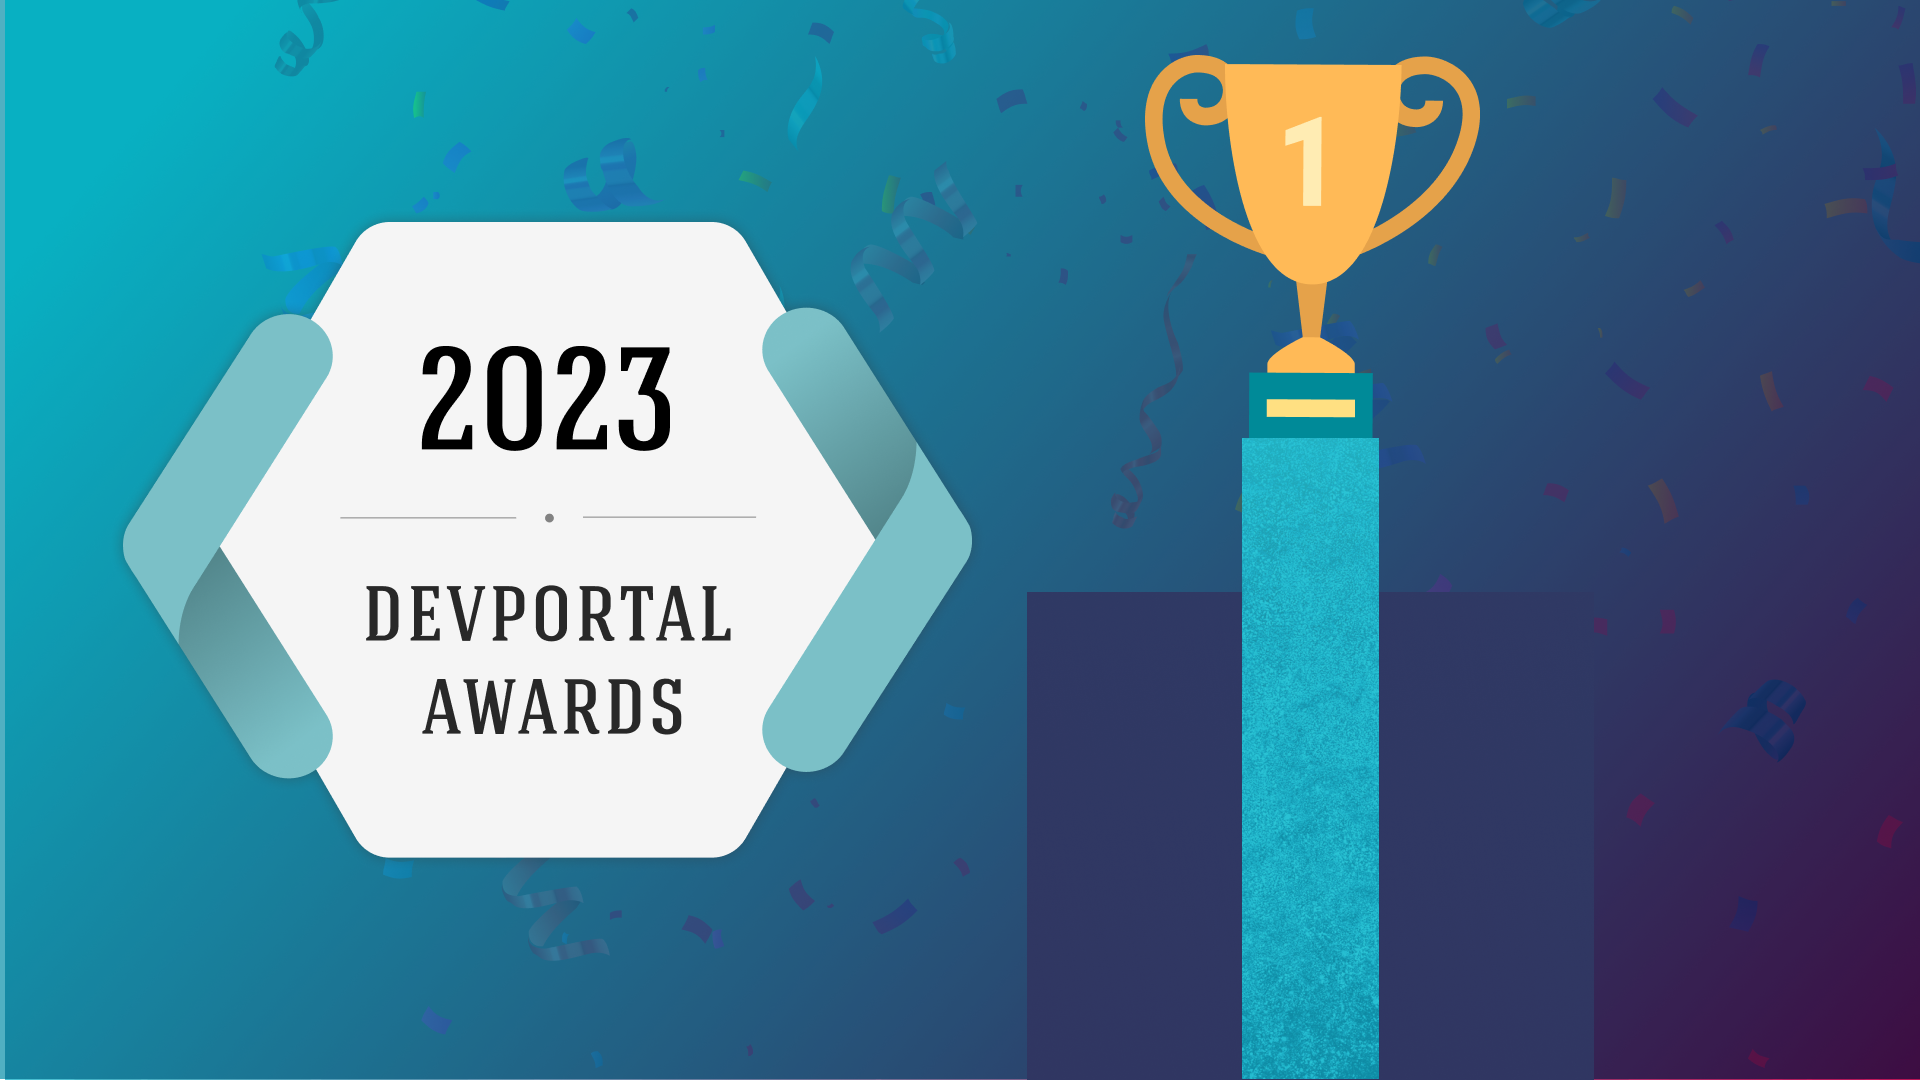 DevPortal awards logo and a trophy on a pillar